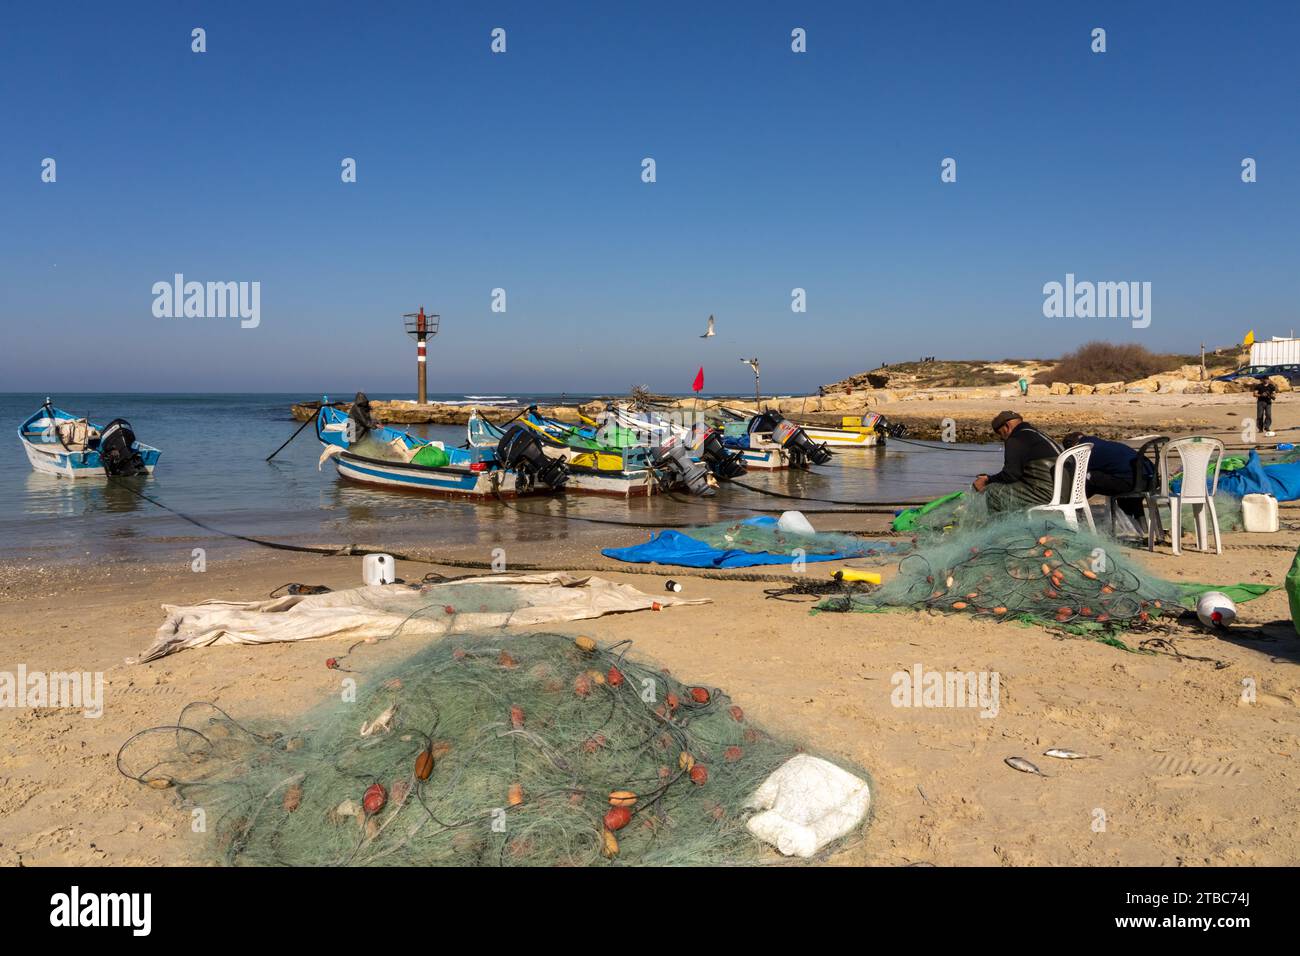 Fishing boats in Jisr az-Zarqa Stock Photo